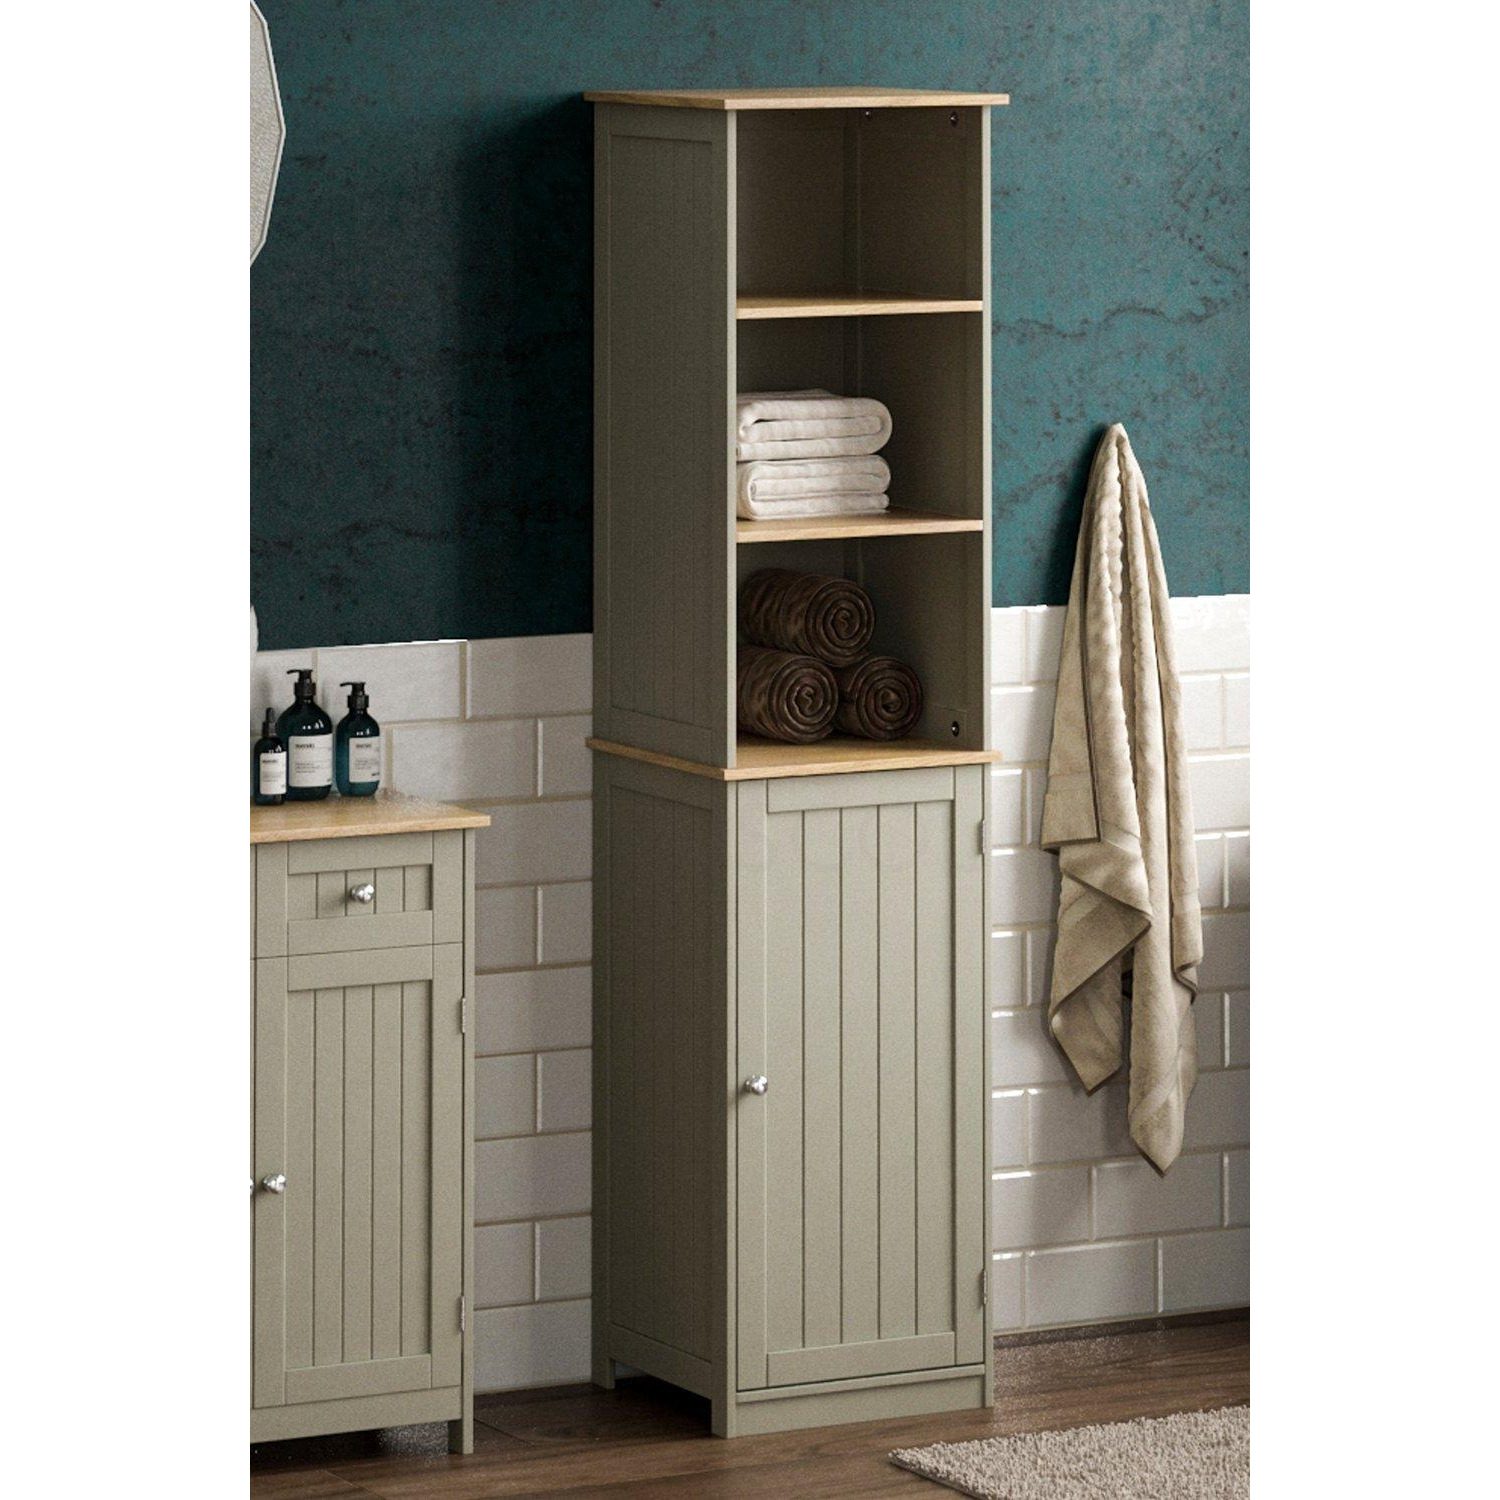 Bath Vida Priano 1 Door 2 Shelves Tall Cabinet Storage Bathroom Furniture 1600 x 400 x 380 mm - image 1